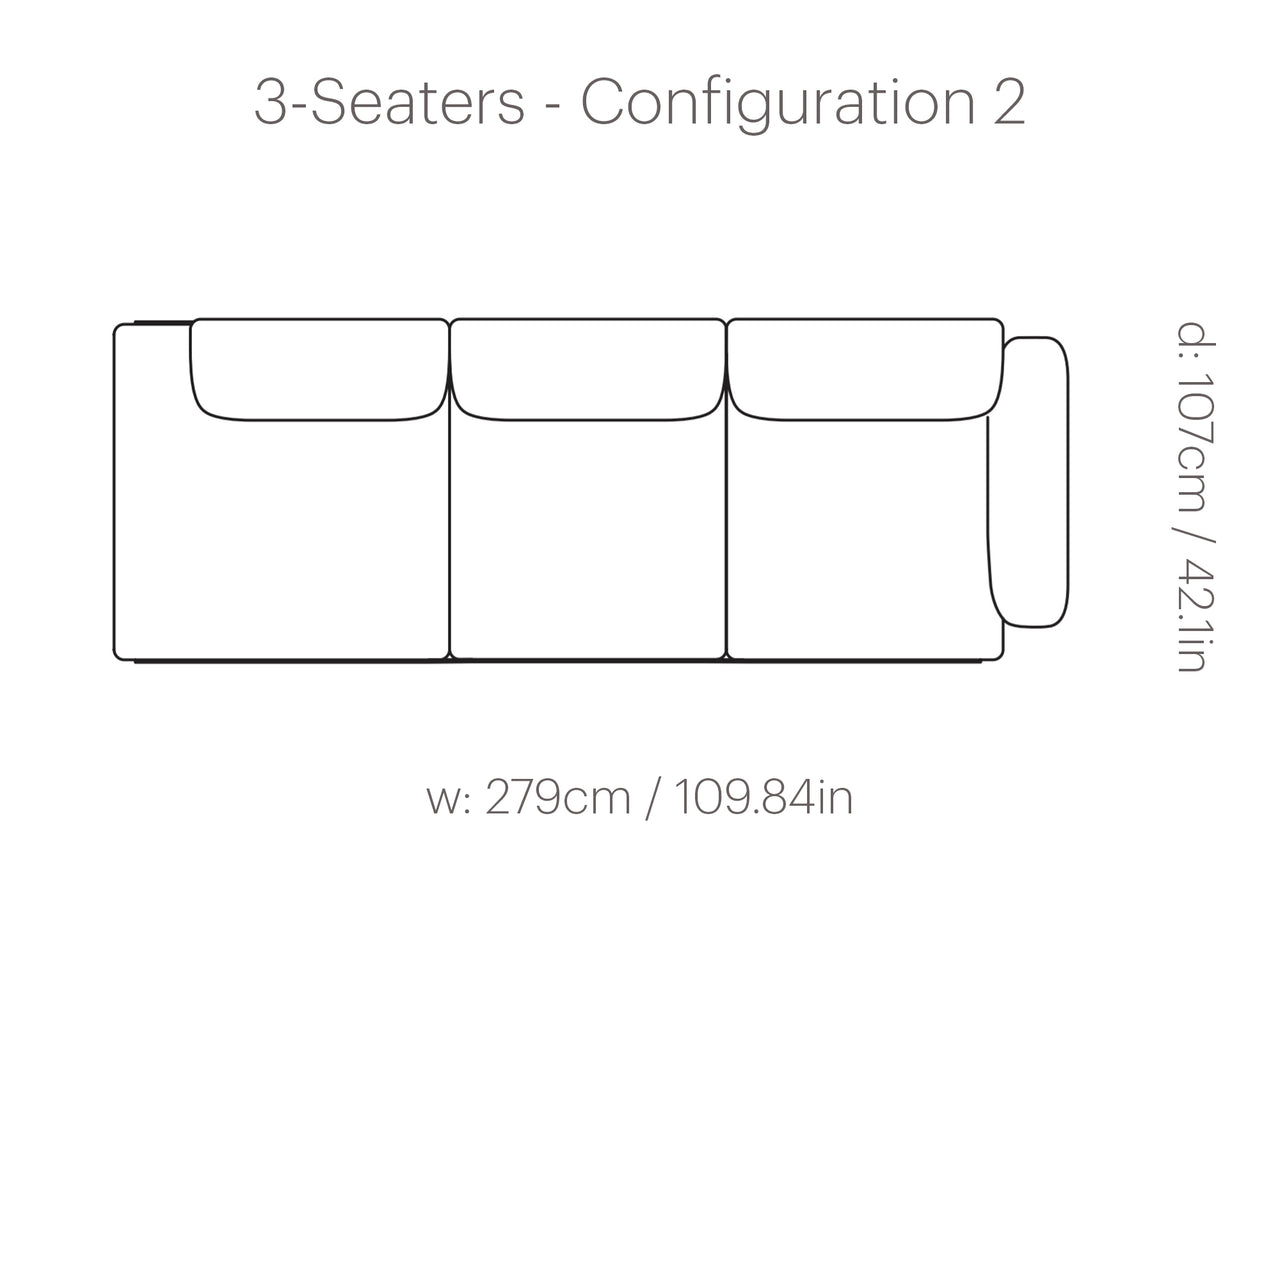 In Situ Modular Sofa: 3 Seater + Configuration 2